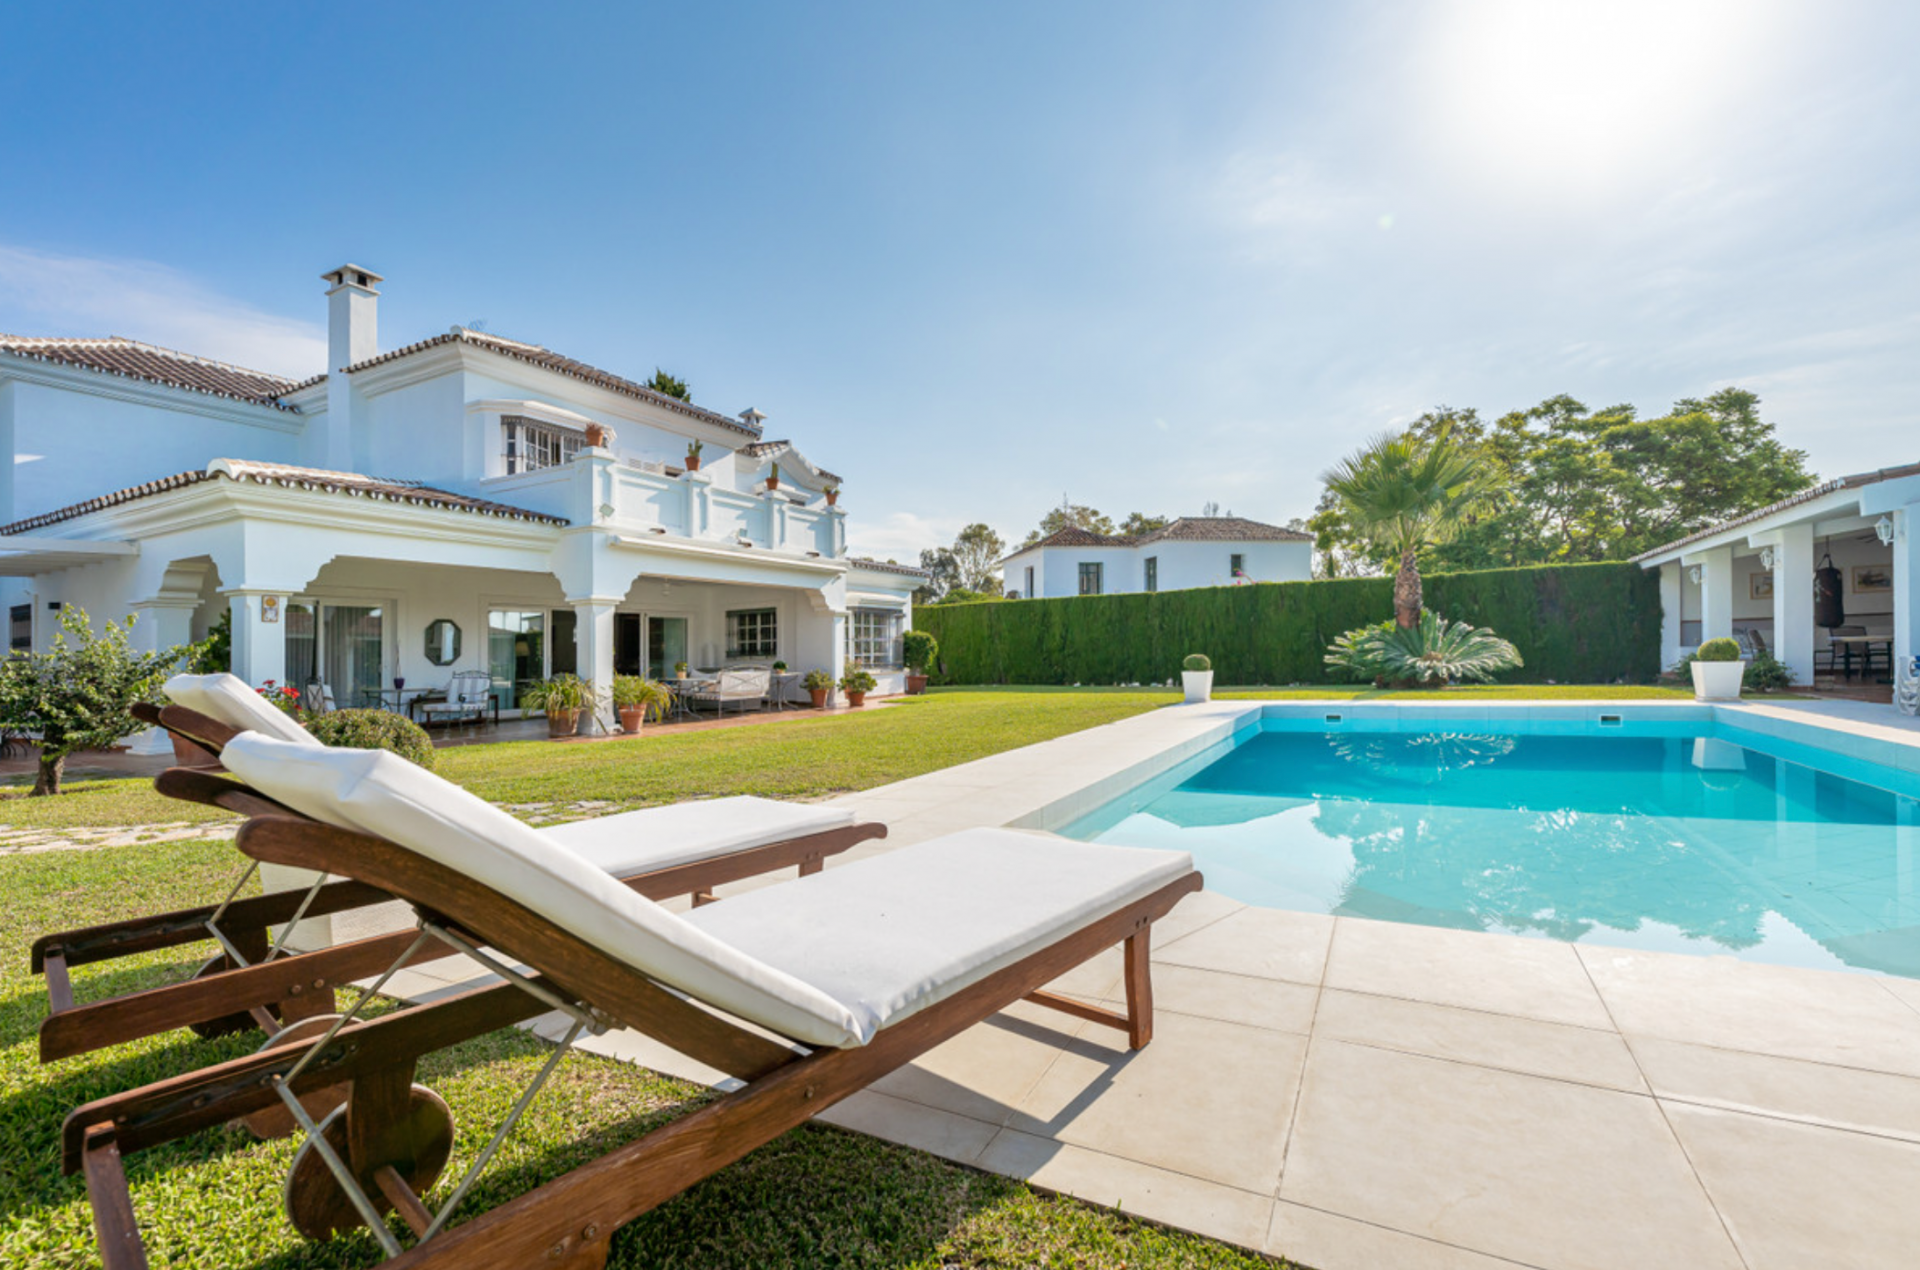 Magnificent villa situated in the prestigious area of Casasola - Guadalmina Baja very close to the beach